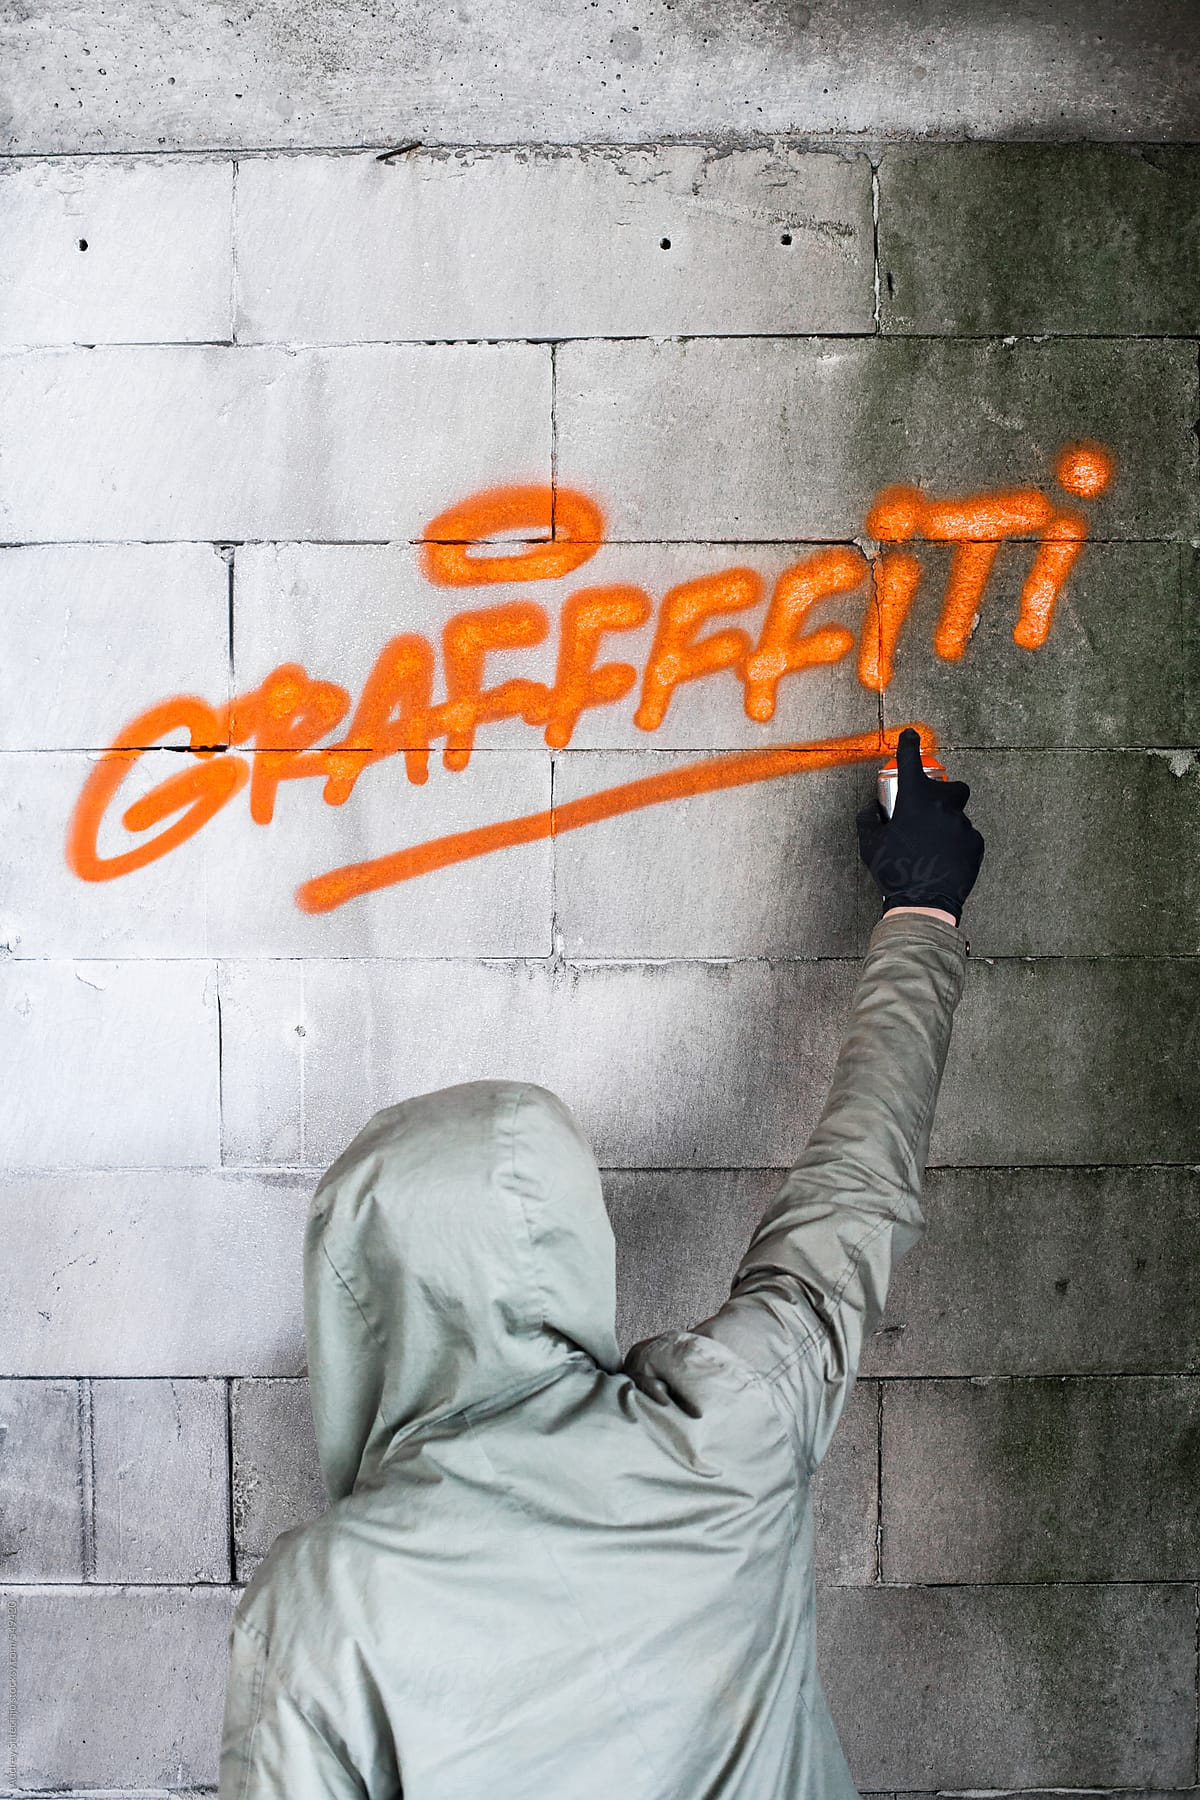 Graffiti artist writing on wall with orange spray.